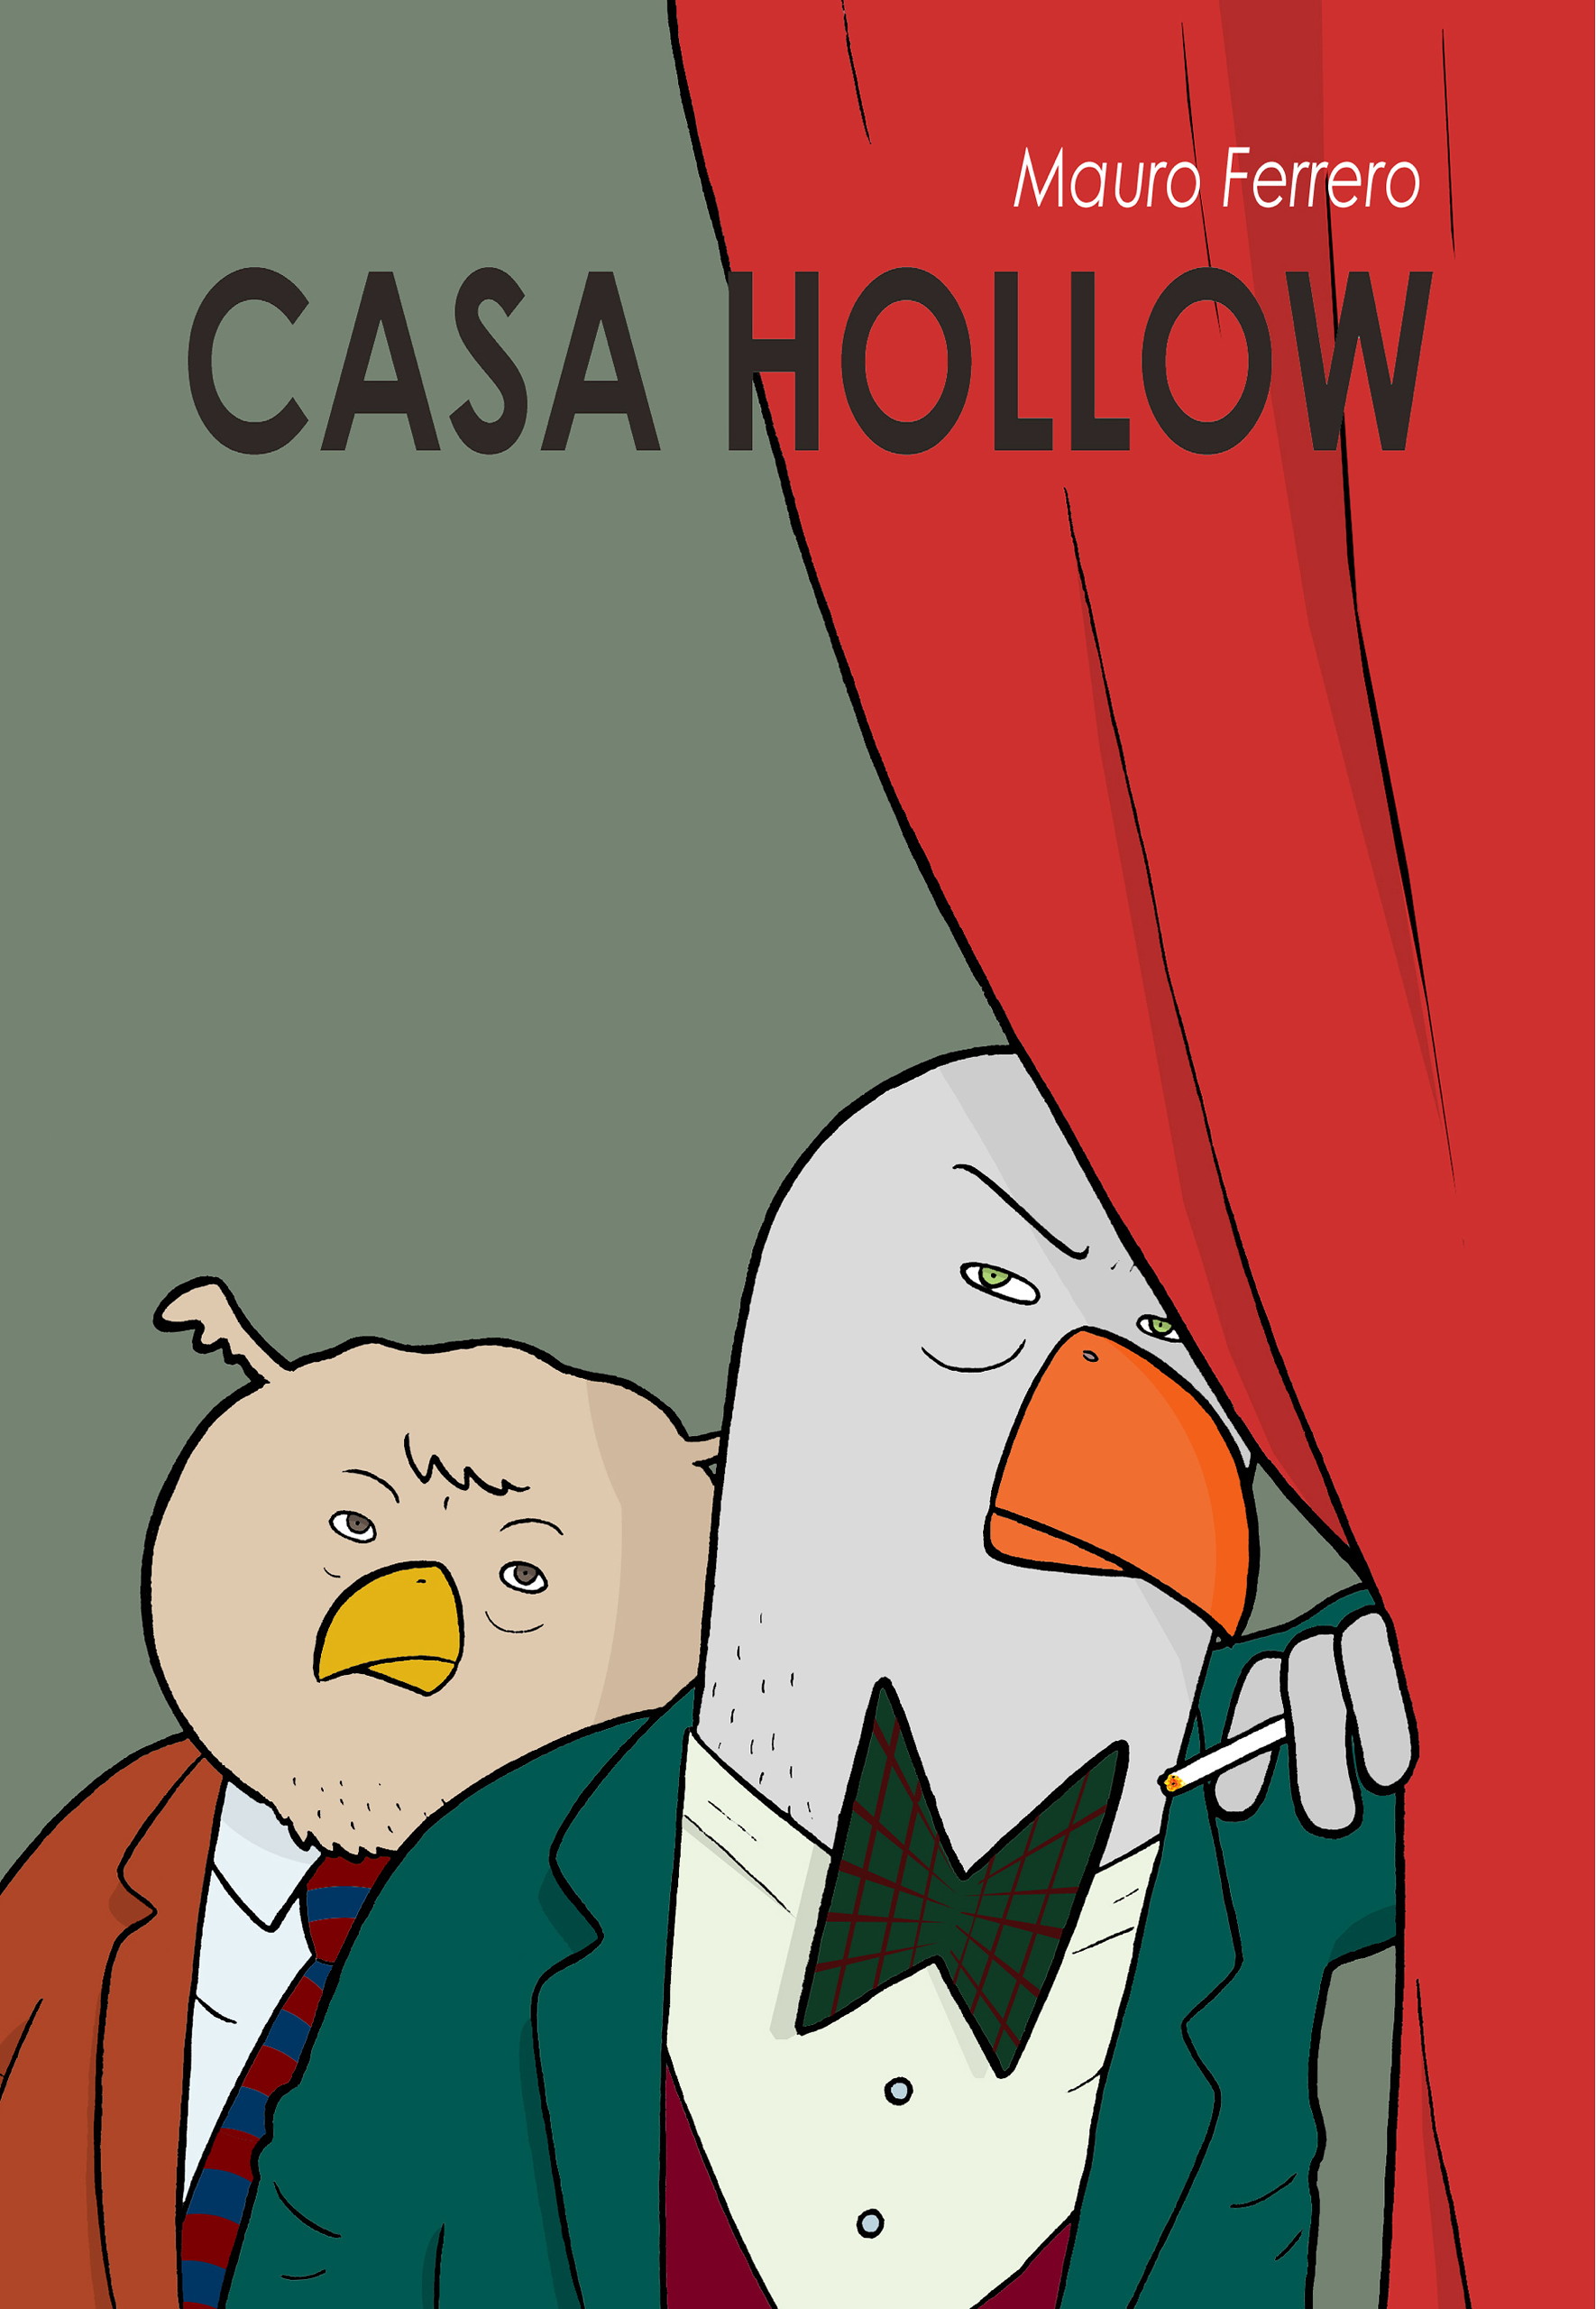 Casa Hollow (Italiano language, Bacche Rosse)